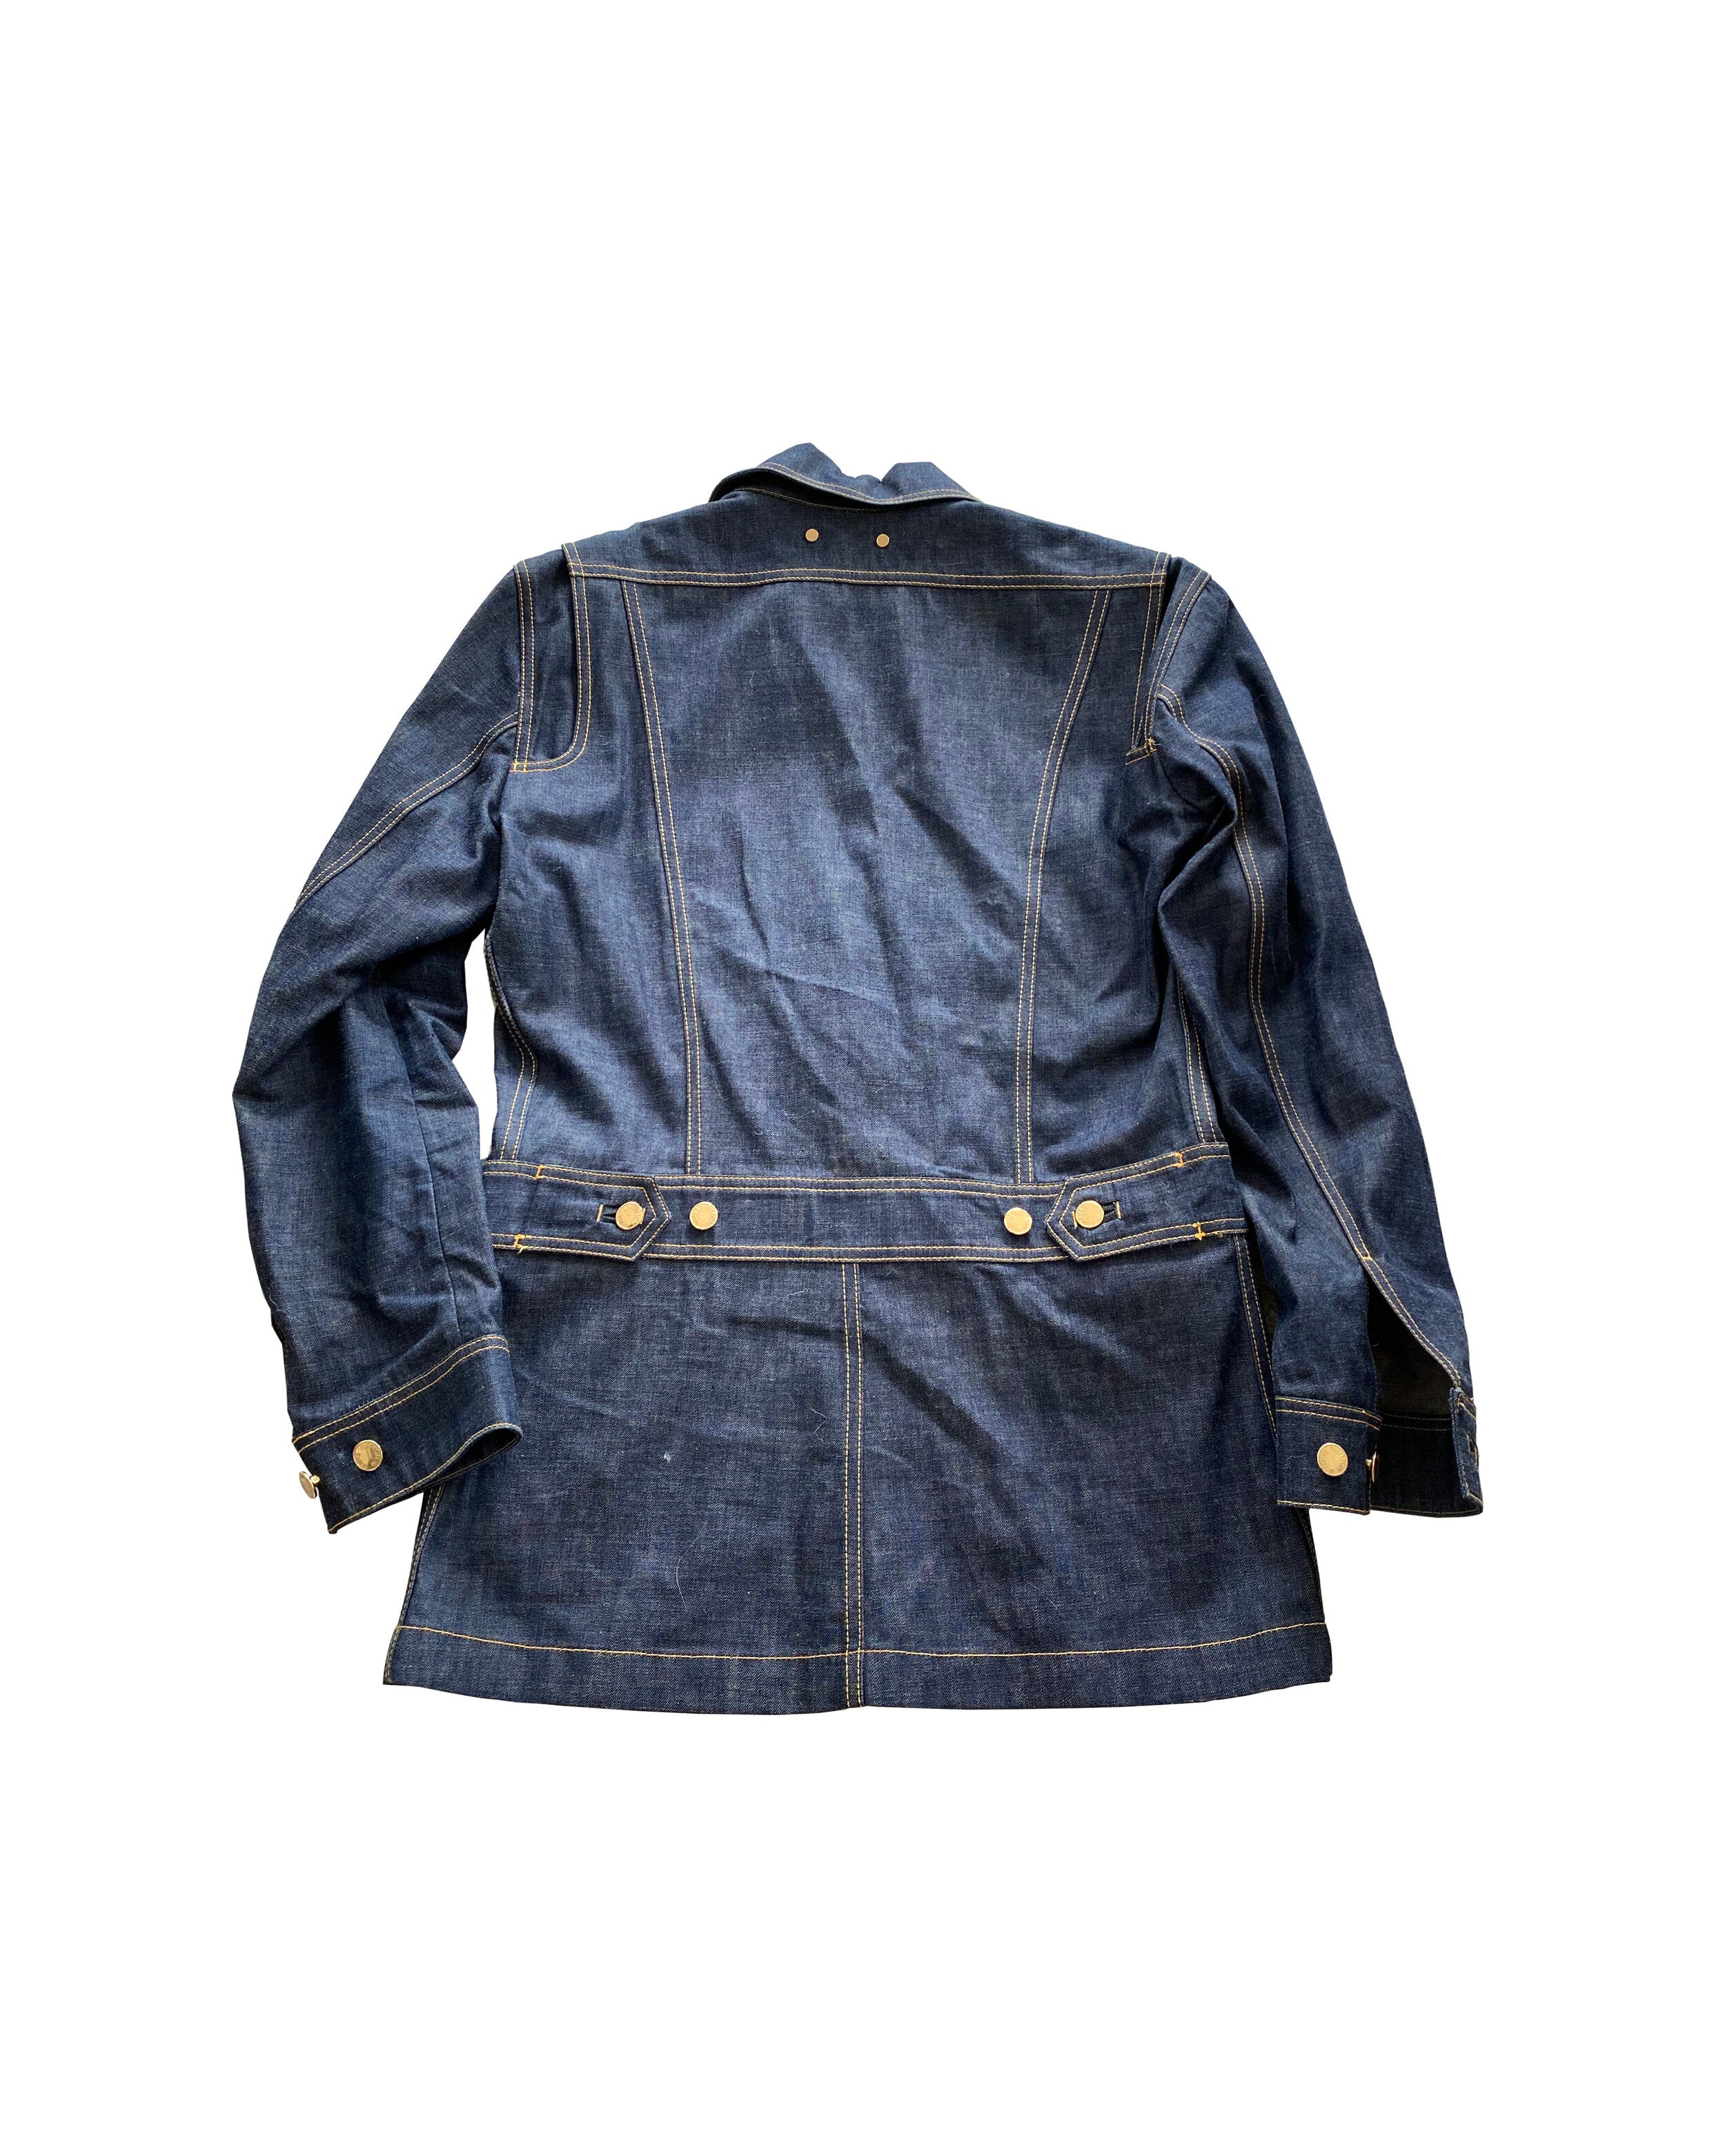 Louis Vuitton 2000s Dark Denim Military Rare Jacket